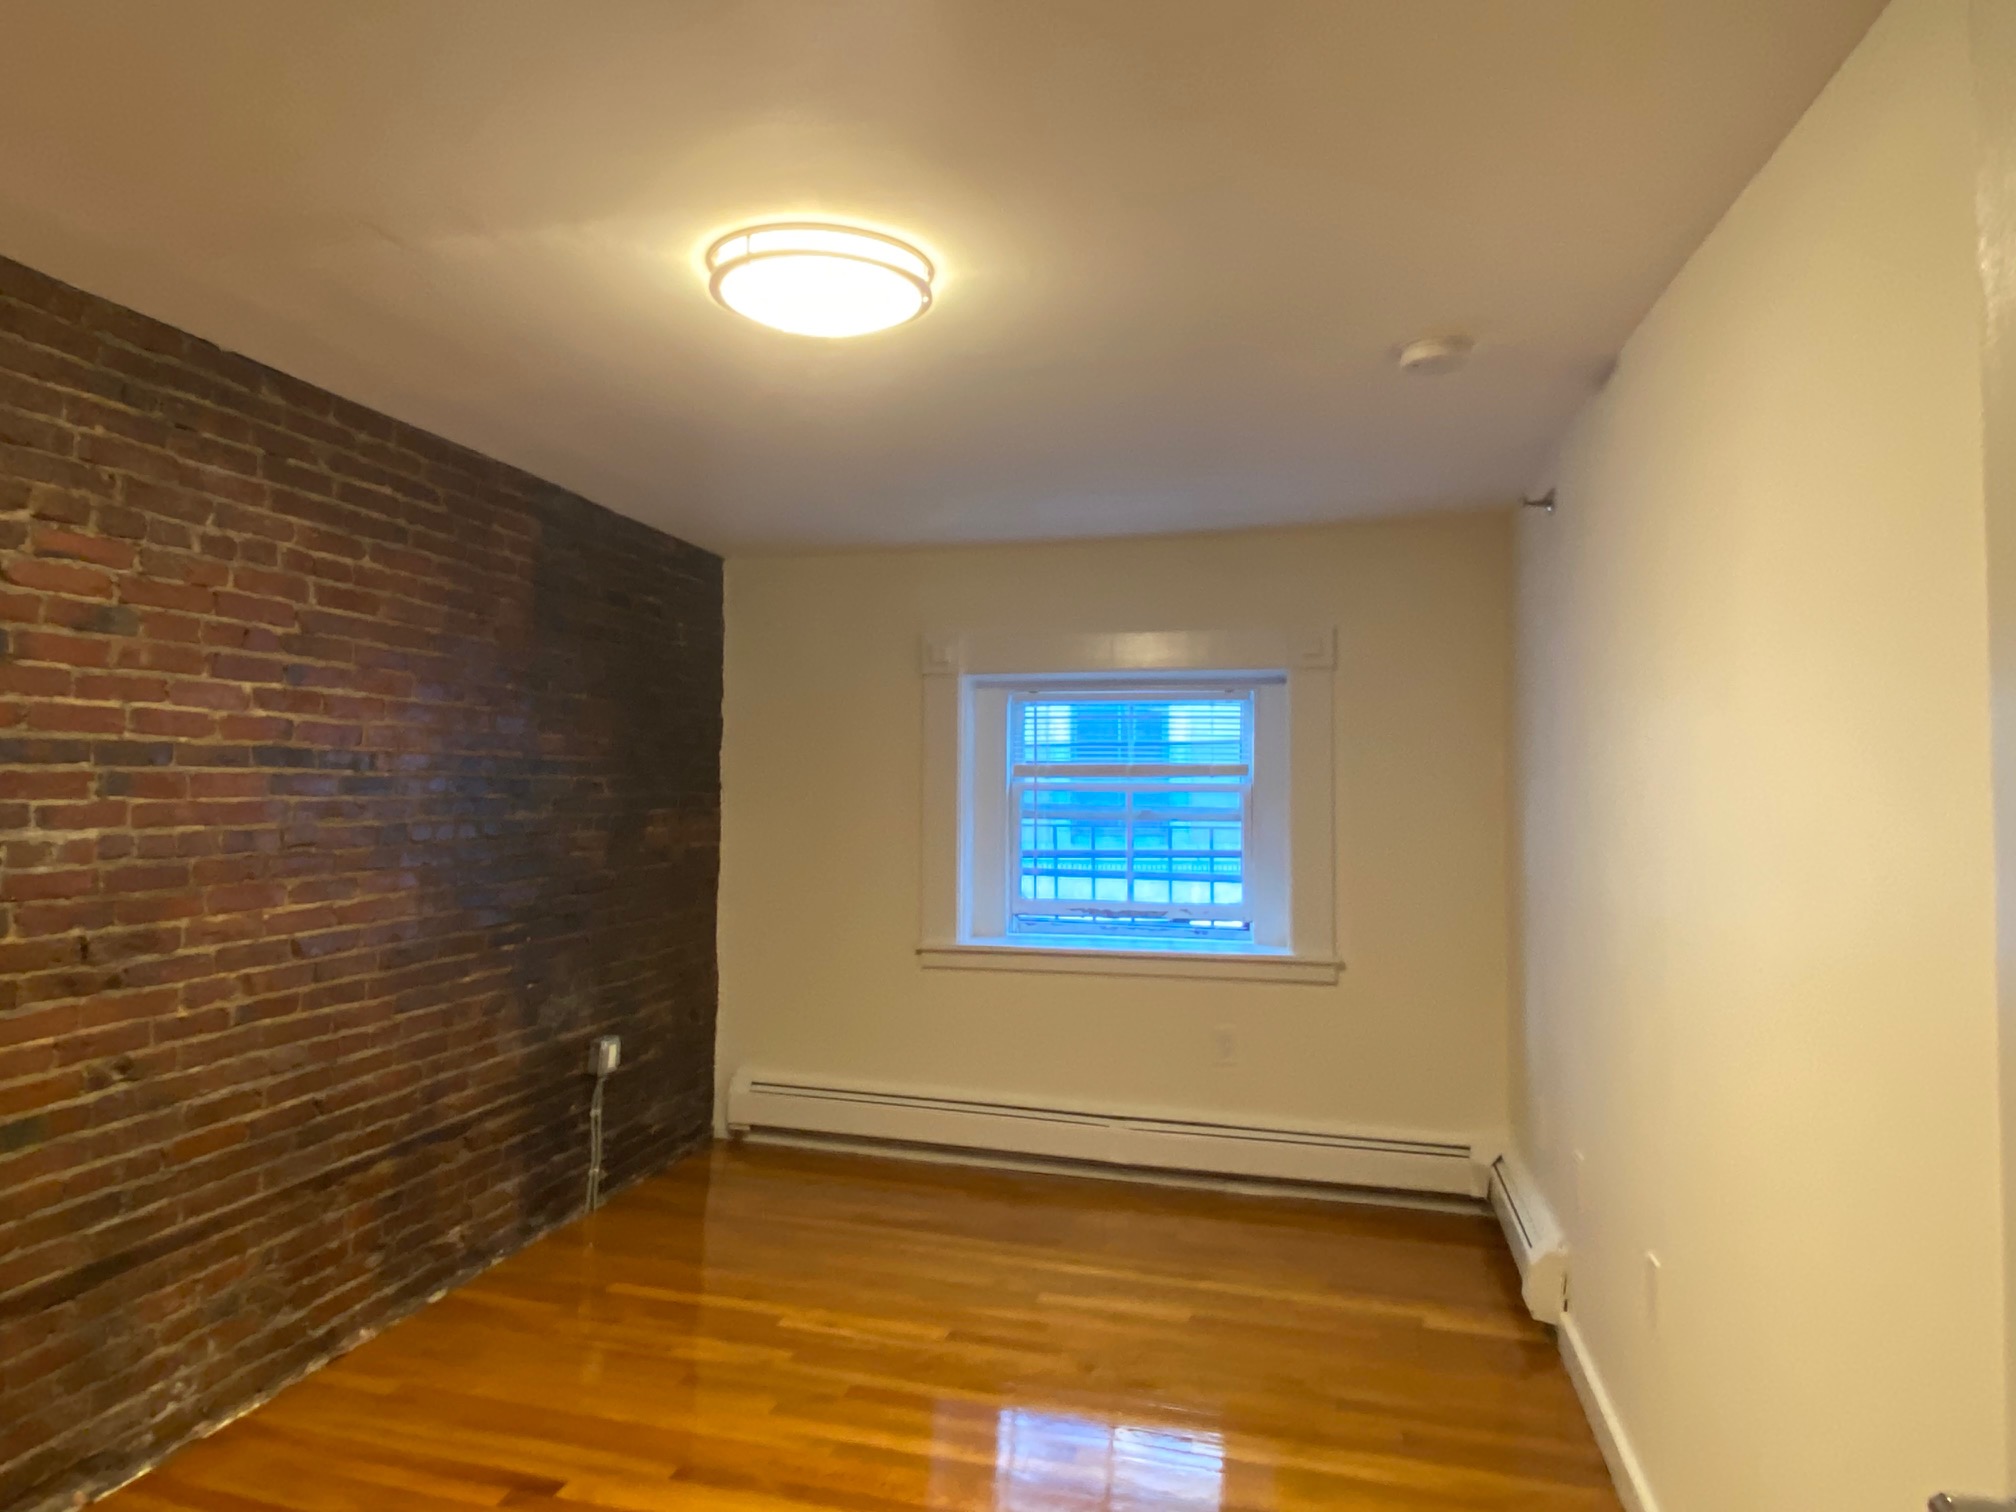 Photos of apartment on Hancock St.,Boston MA 02114